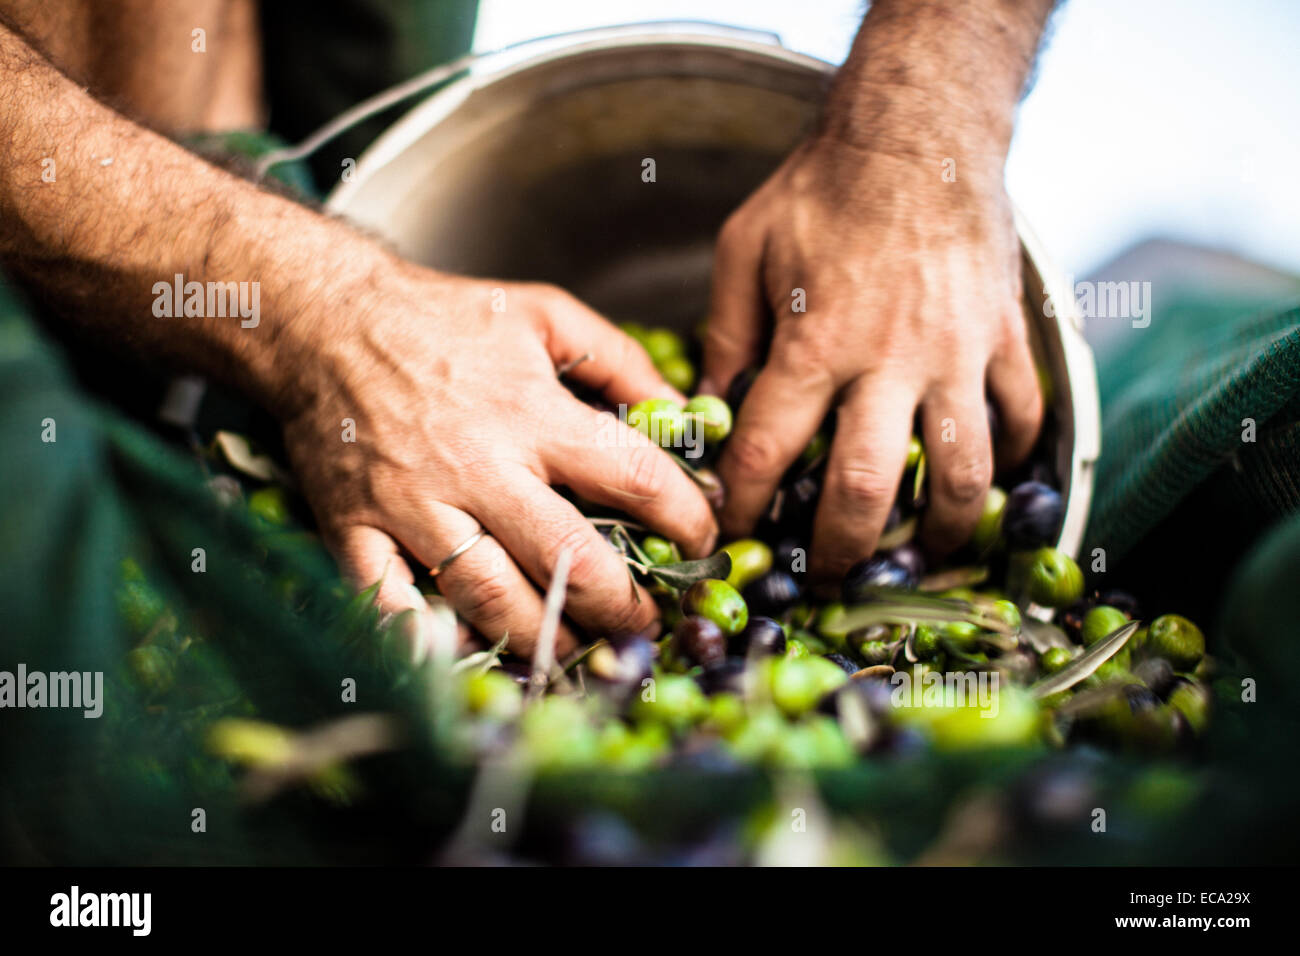 Man pushing olives in bucket Stock Photo